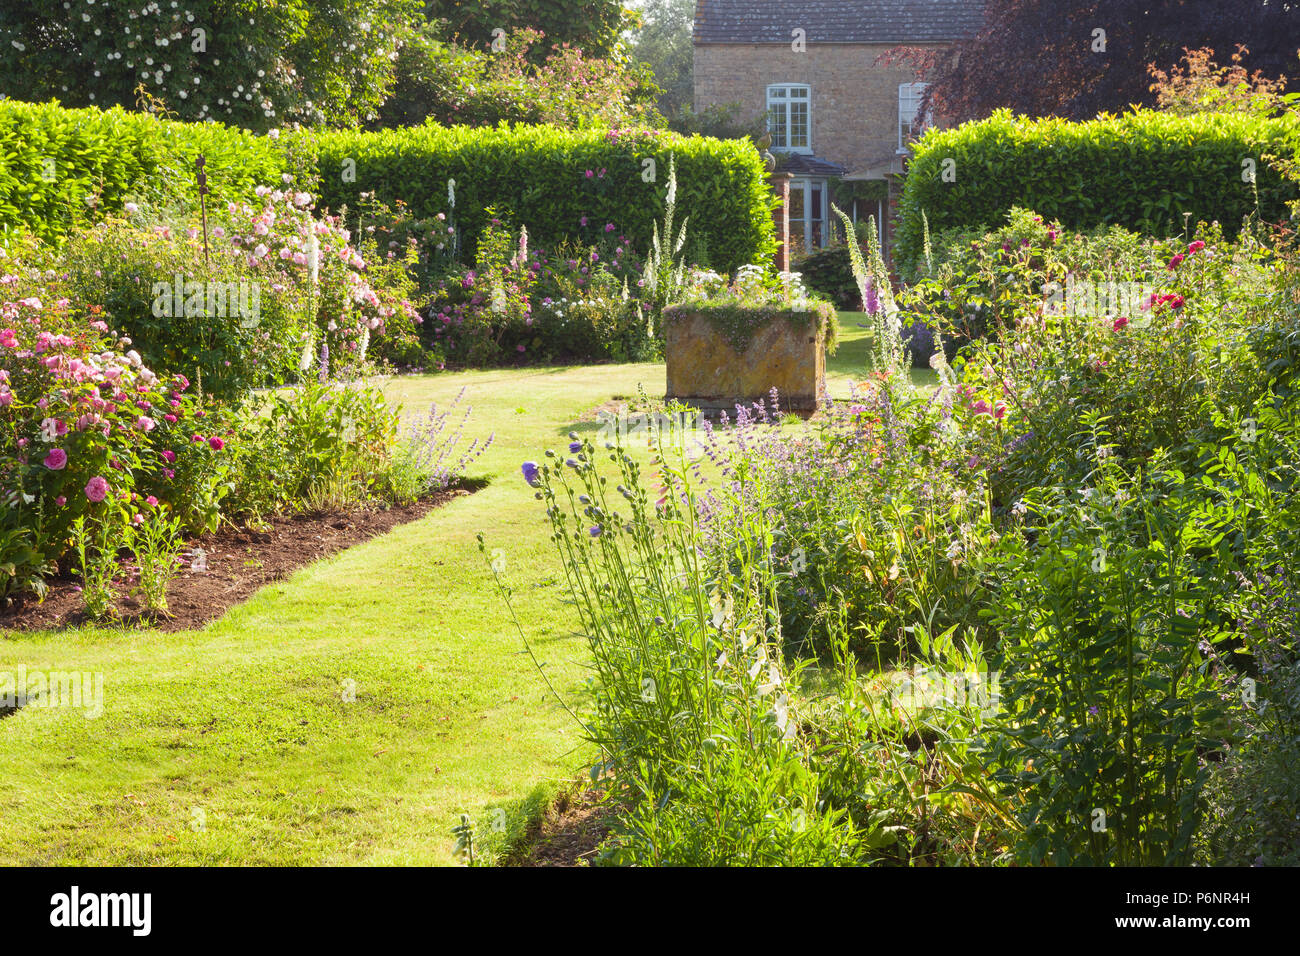 Hall Farm Garden, Harpswell, Lincolnshire, UK. Summer, June 2018. Stock Photo